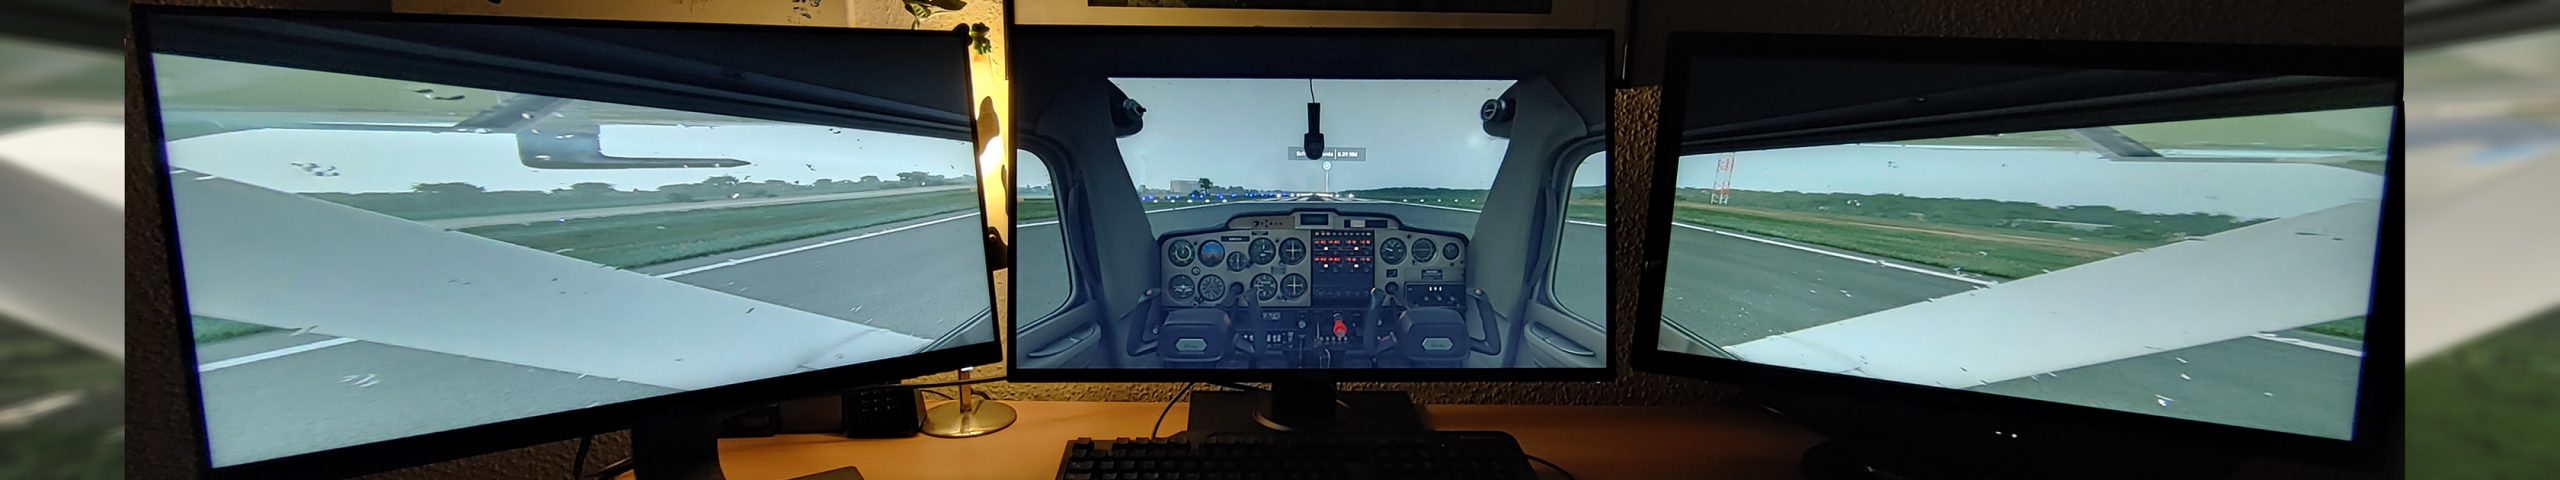 flight simulator 2020 003 scaled